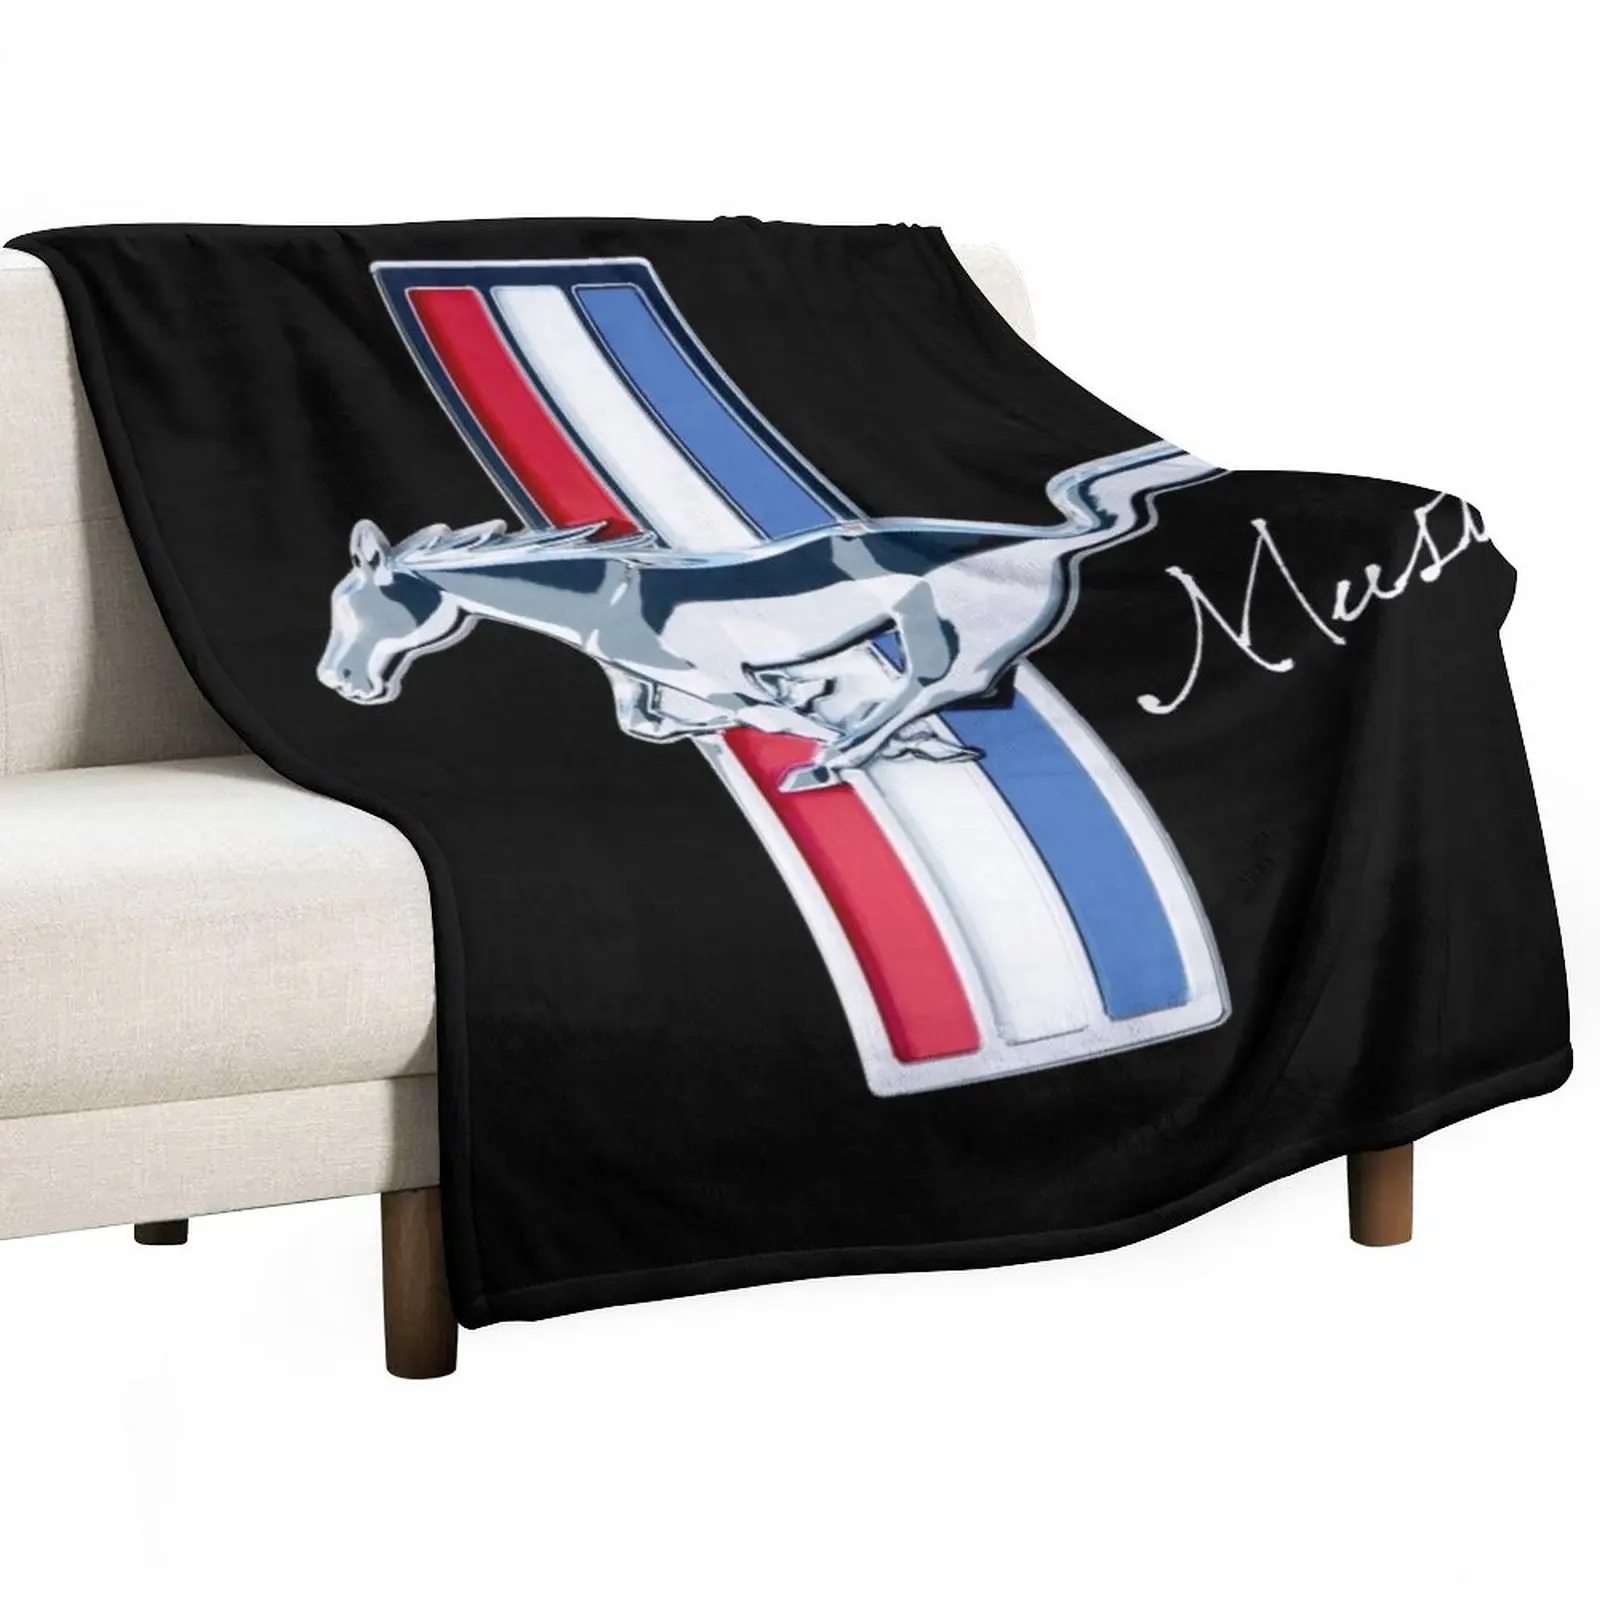 

New Classic Mustang Merch Dark Apparel Throw Blanket Blanket Luxury Personalized Gift Cute Blanket Plaid Heavy Blanket